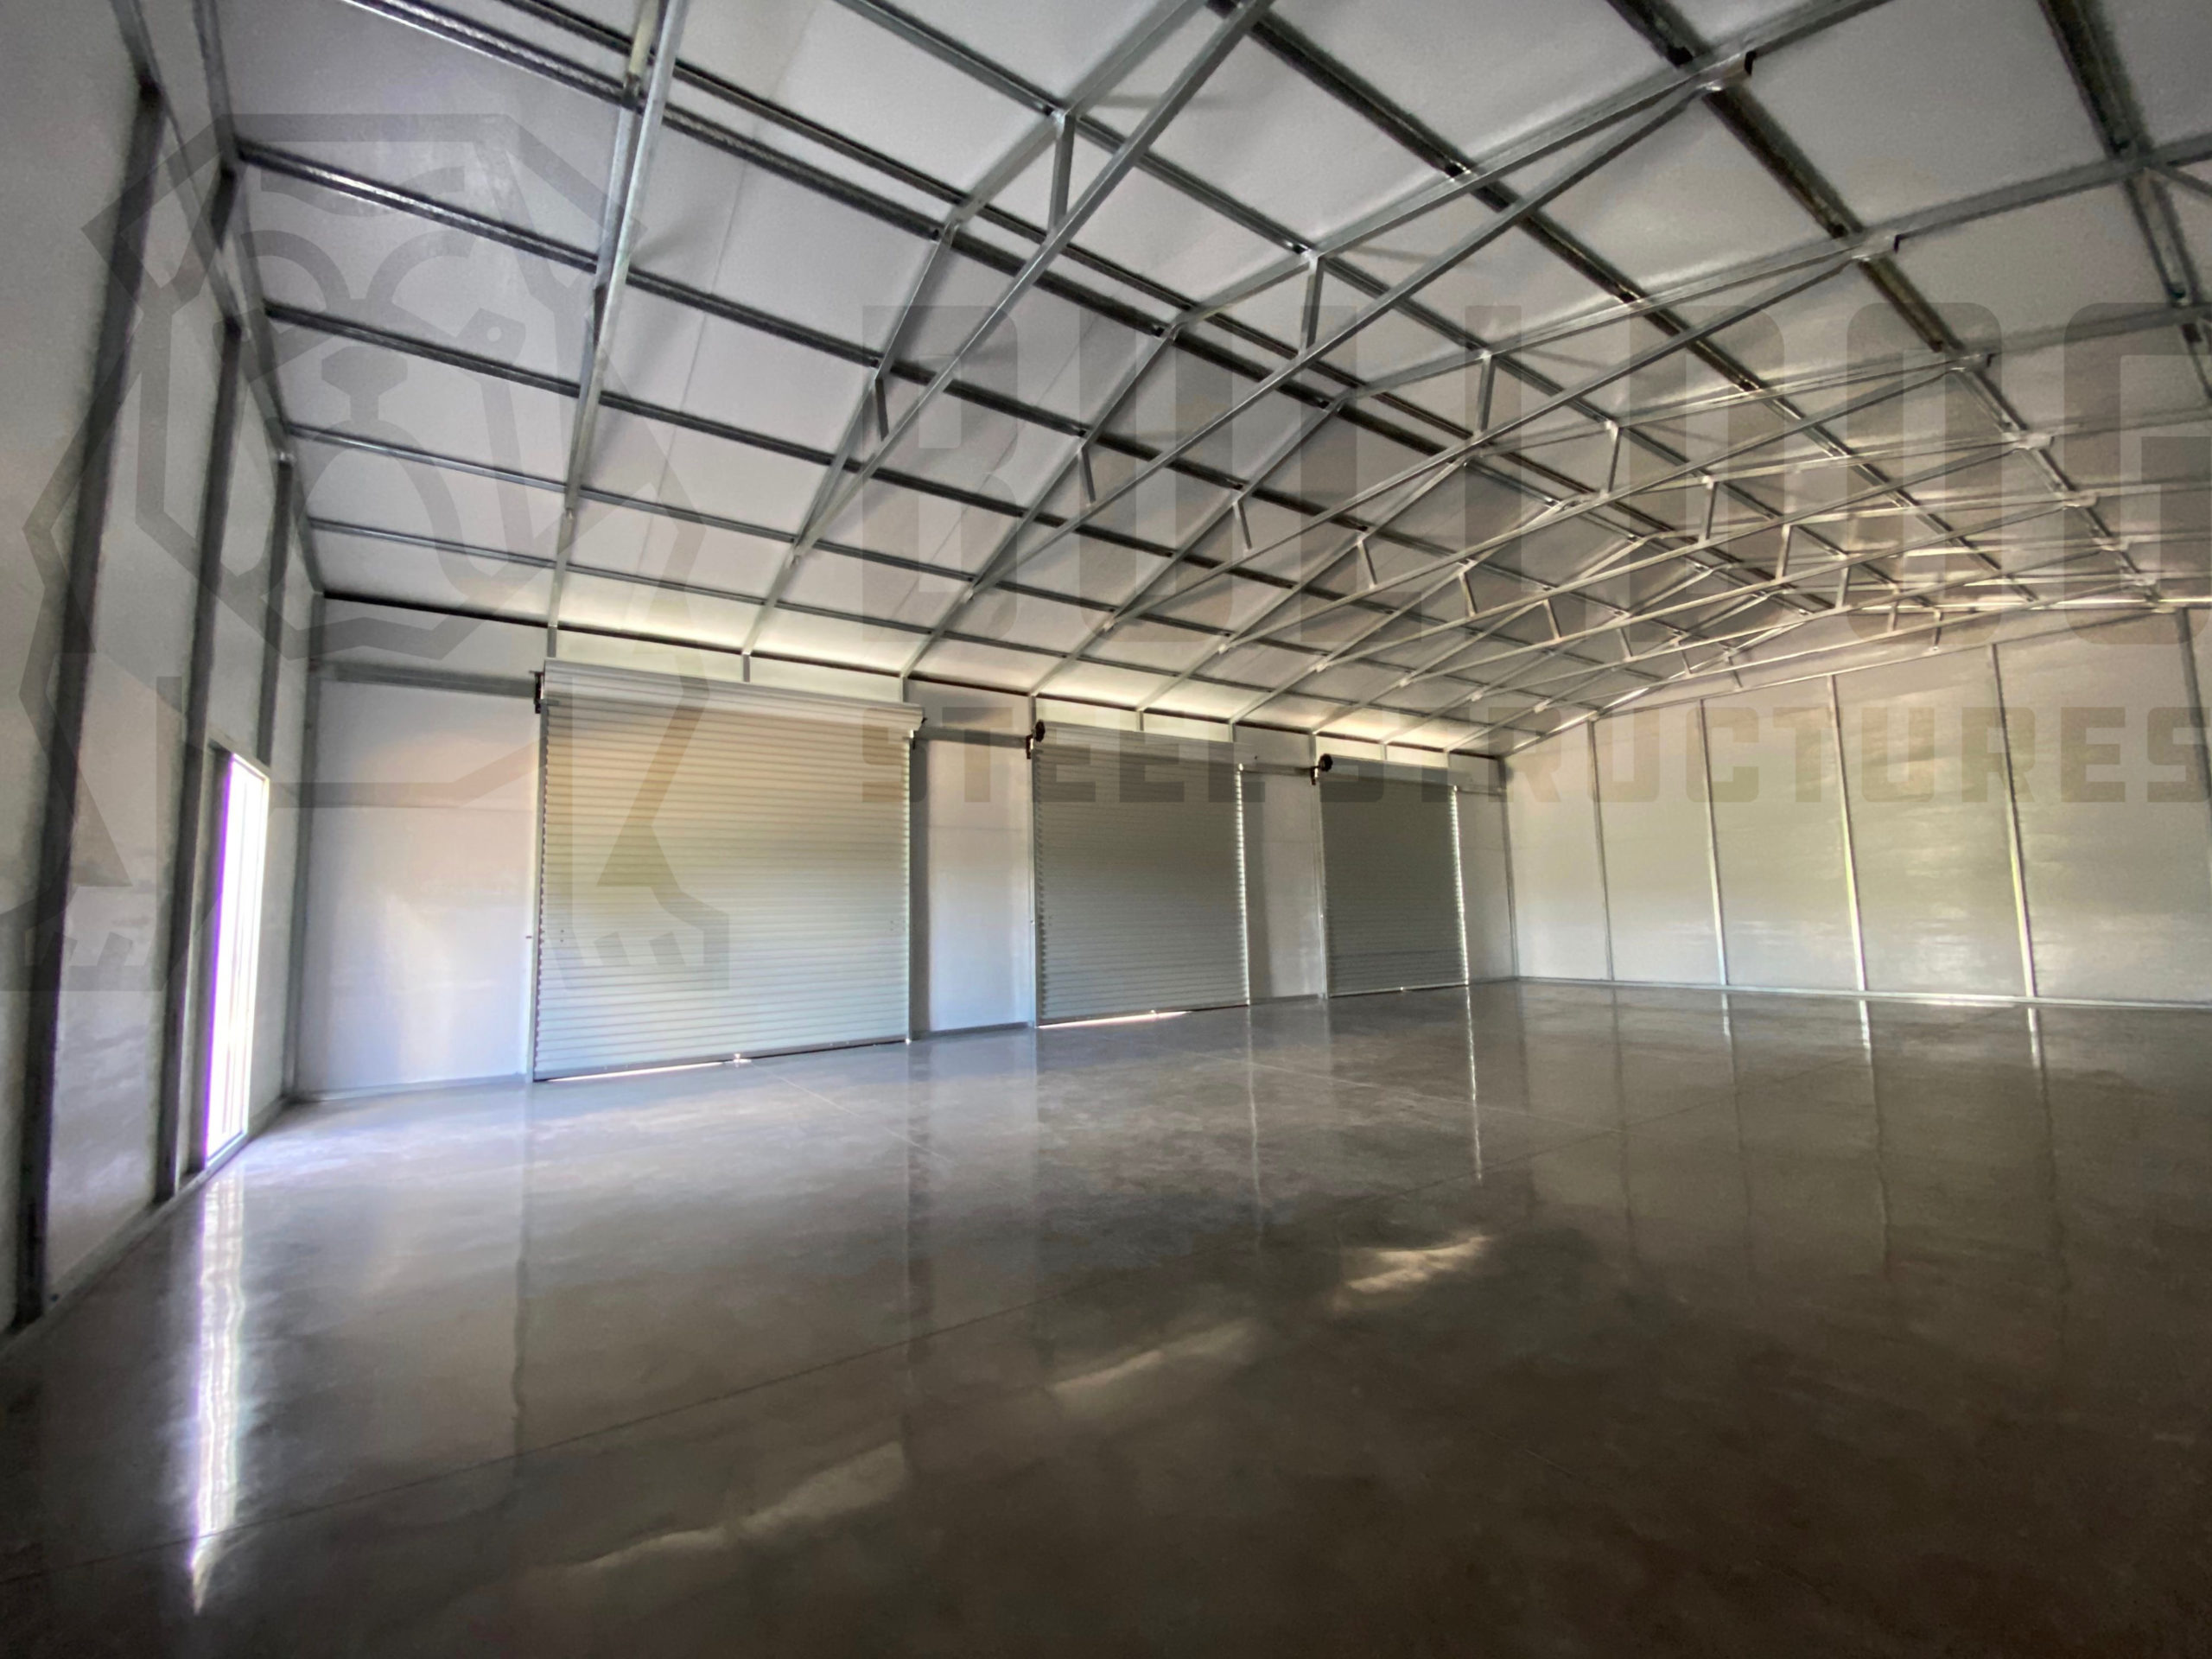 Interior of spacious metal garage